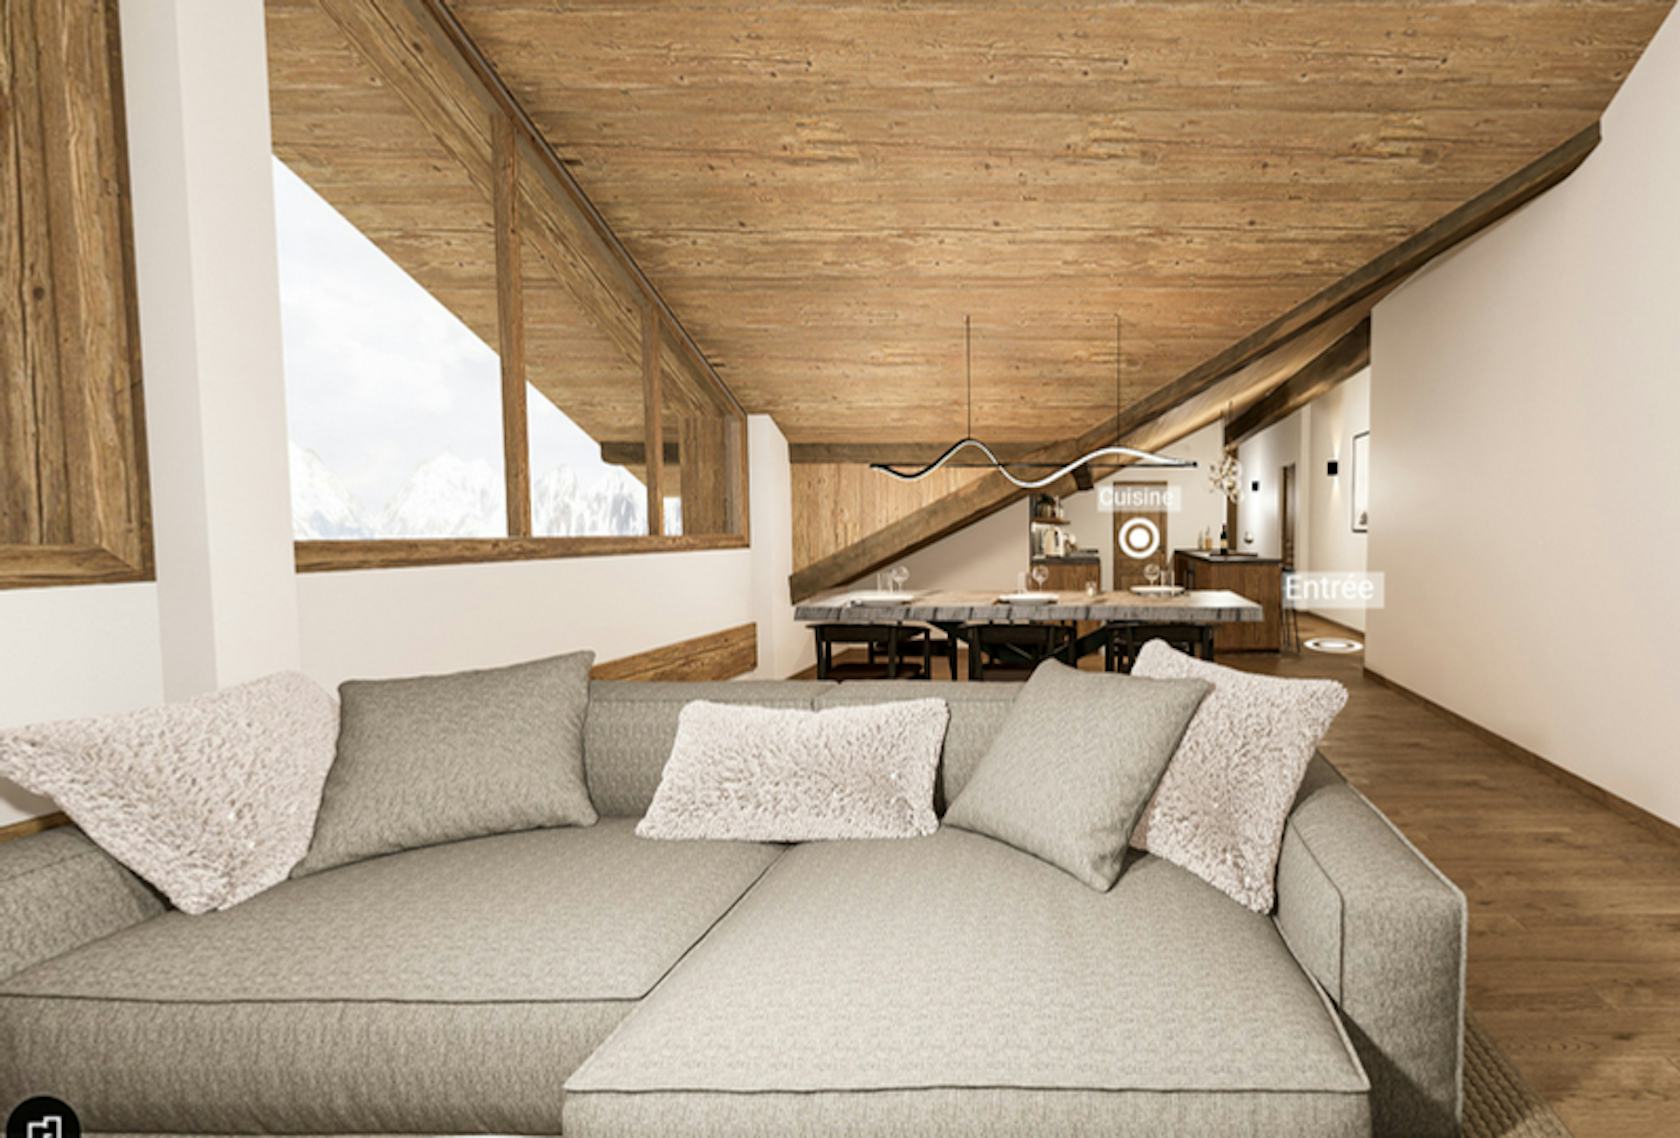 indoors interior design home decor cushion couch living room wood hardwood loft wood panels